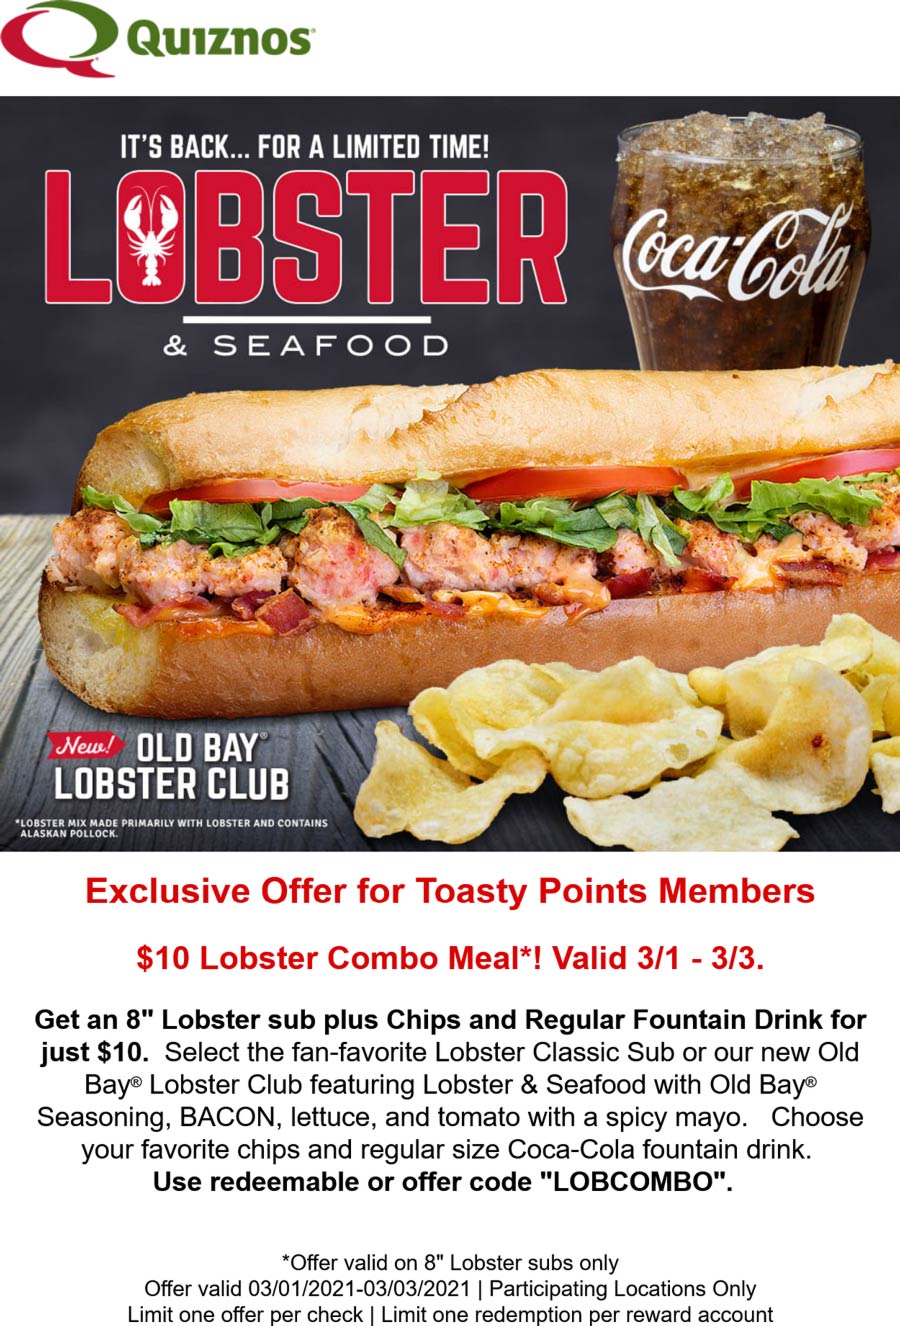 Quiznos restaurants Coupon  Lobster sub sandwich + chips + drink = $10 at Quiznos via promo code LOBCOMBO #quiznos 